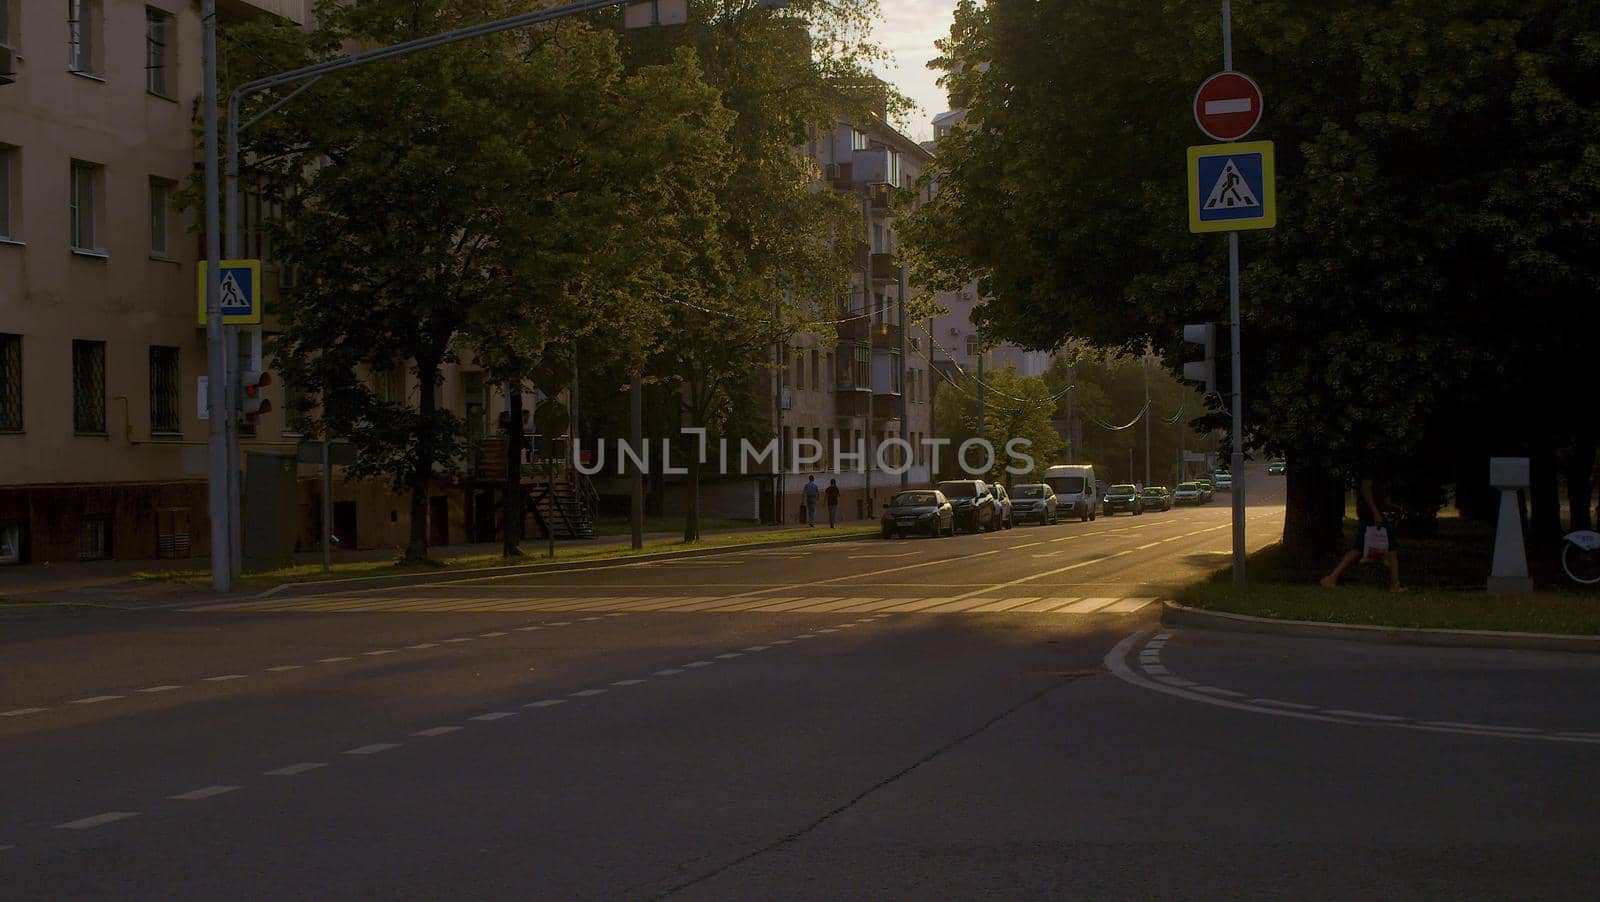 Crosswalk at sunset. Cars on the street by Chudakov